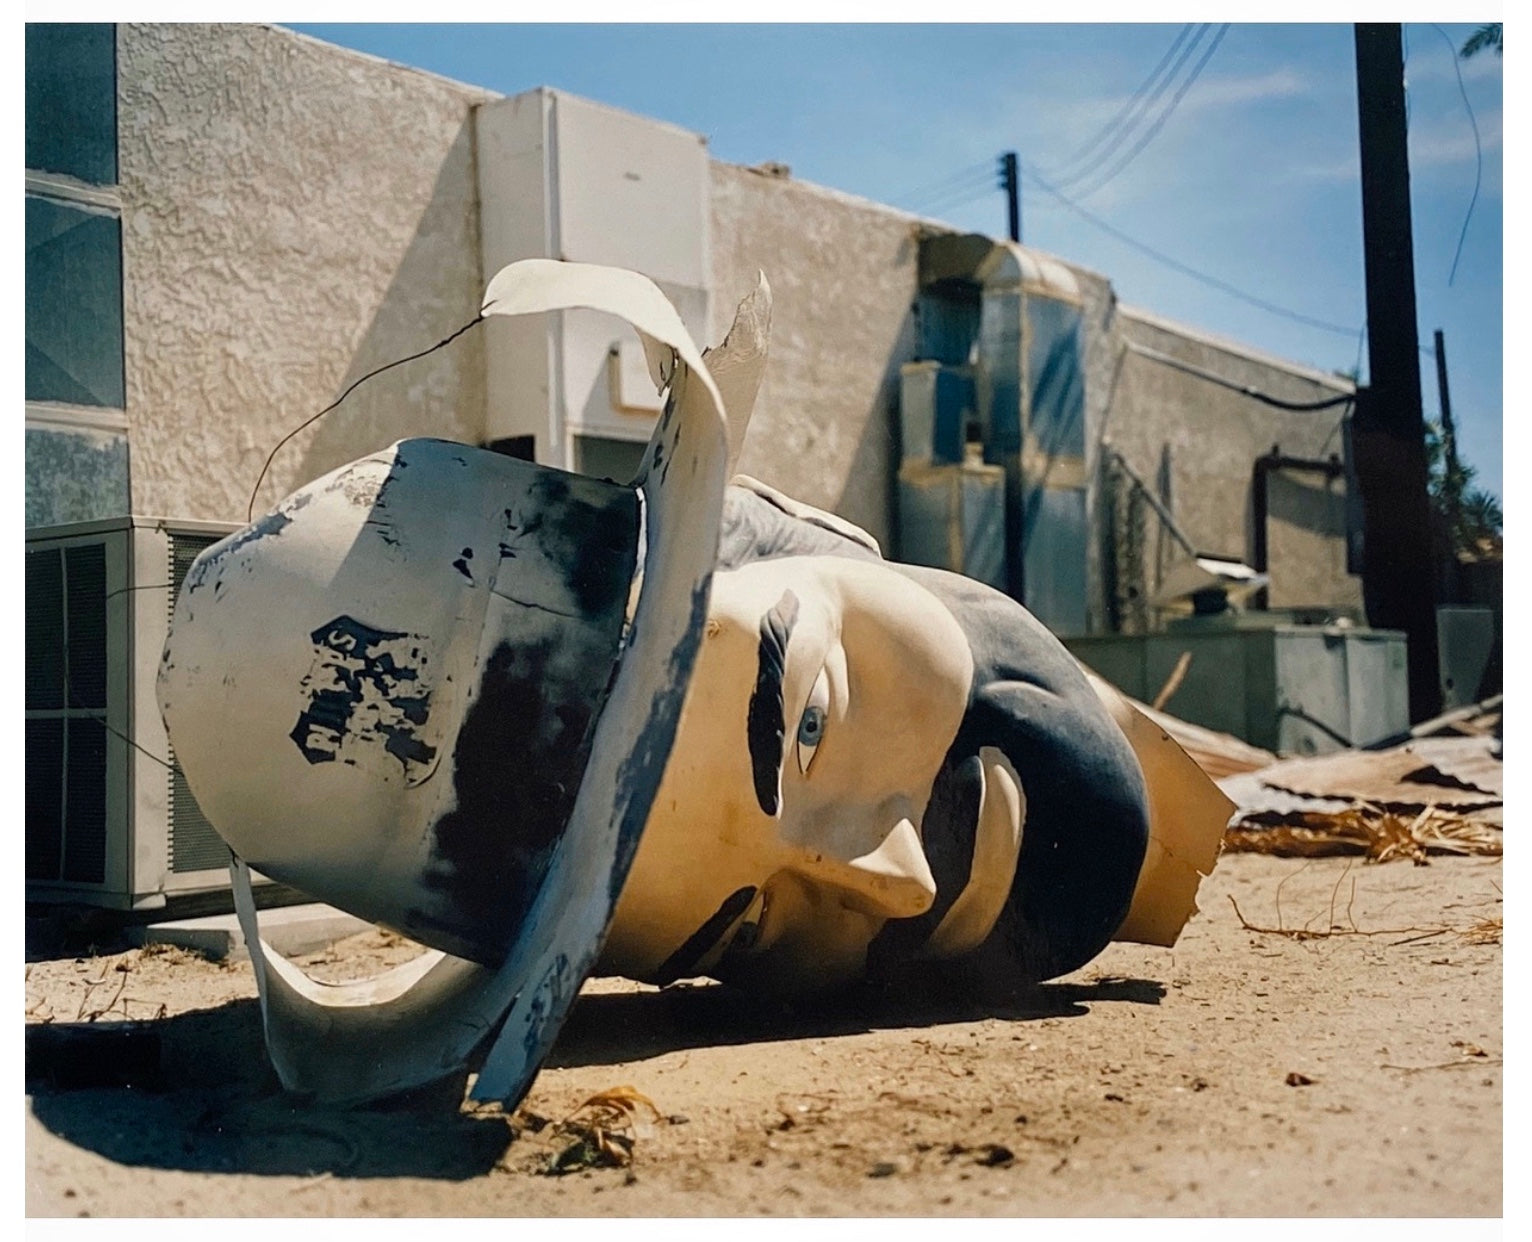 Poor Richard Head, Salton Sea, California, 2002